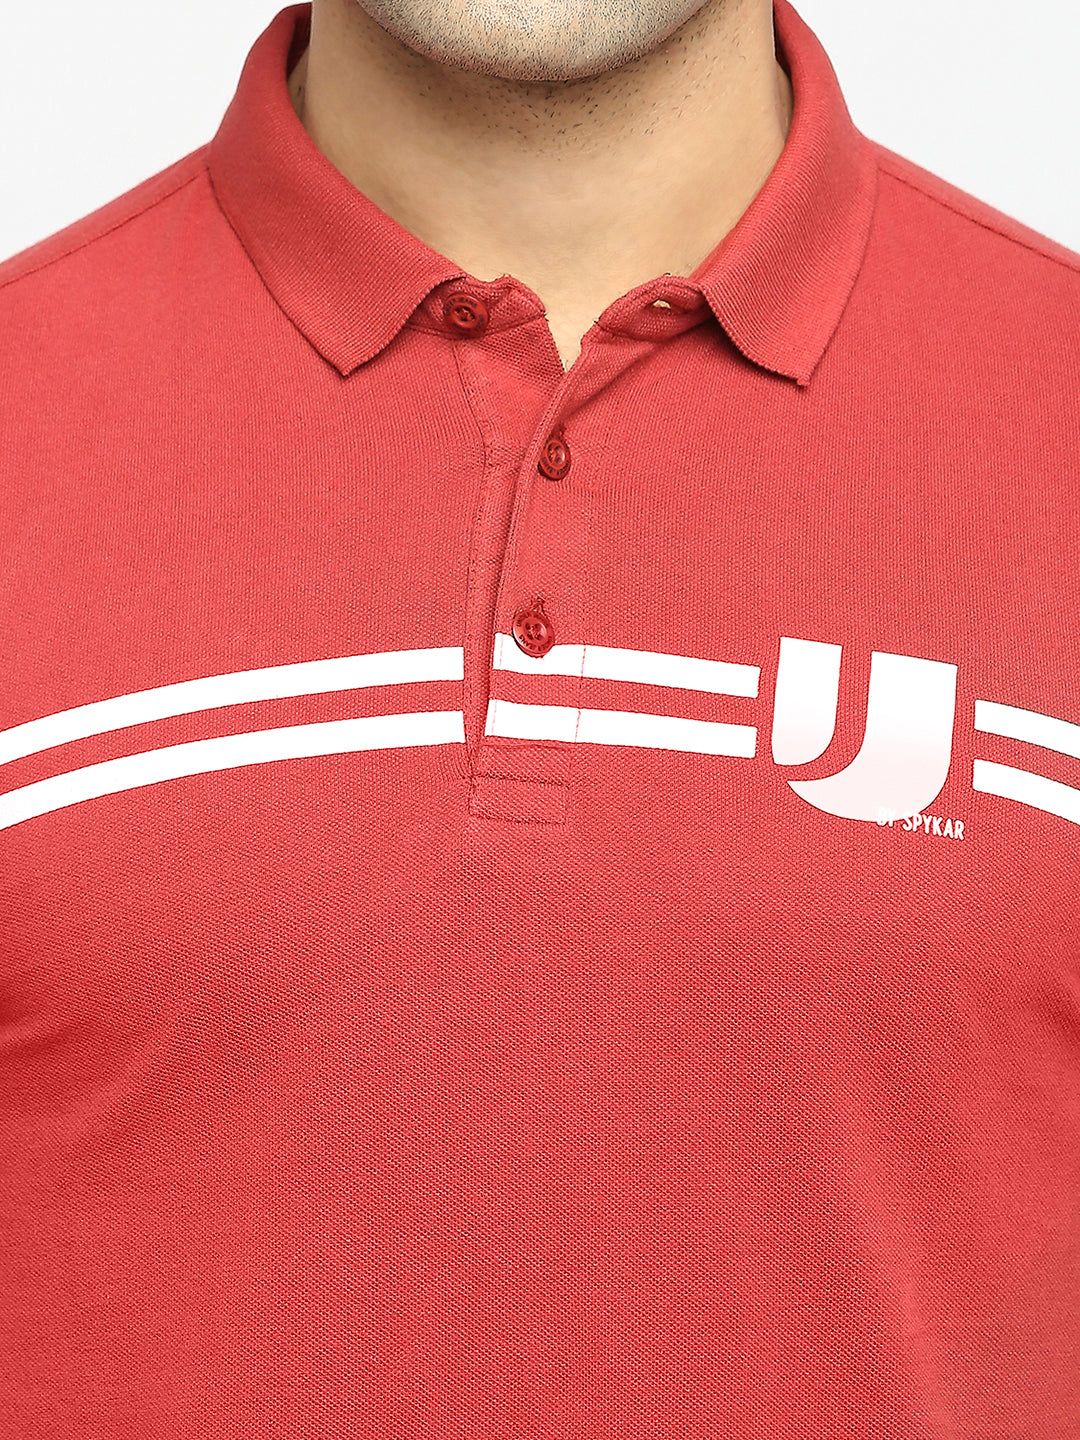 Men Premium Cotton Brick red Polo T-shirt- UnderJeans by Spykar